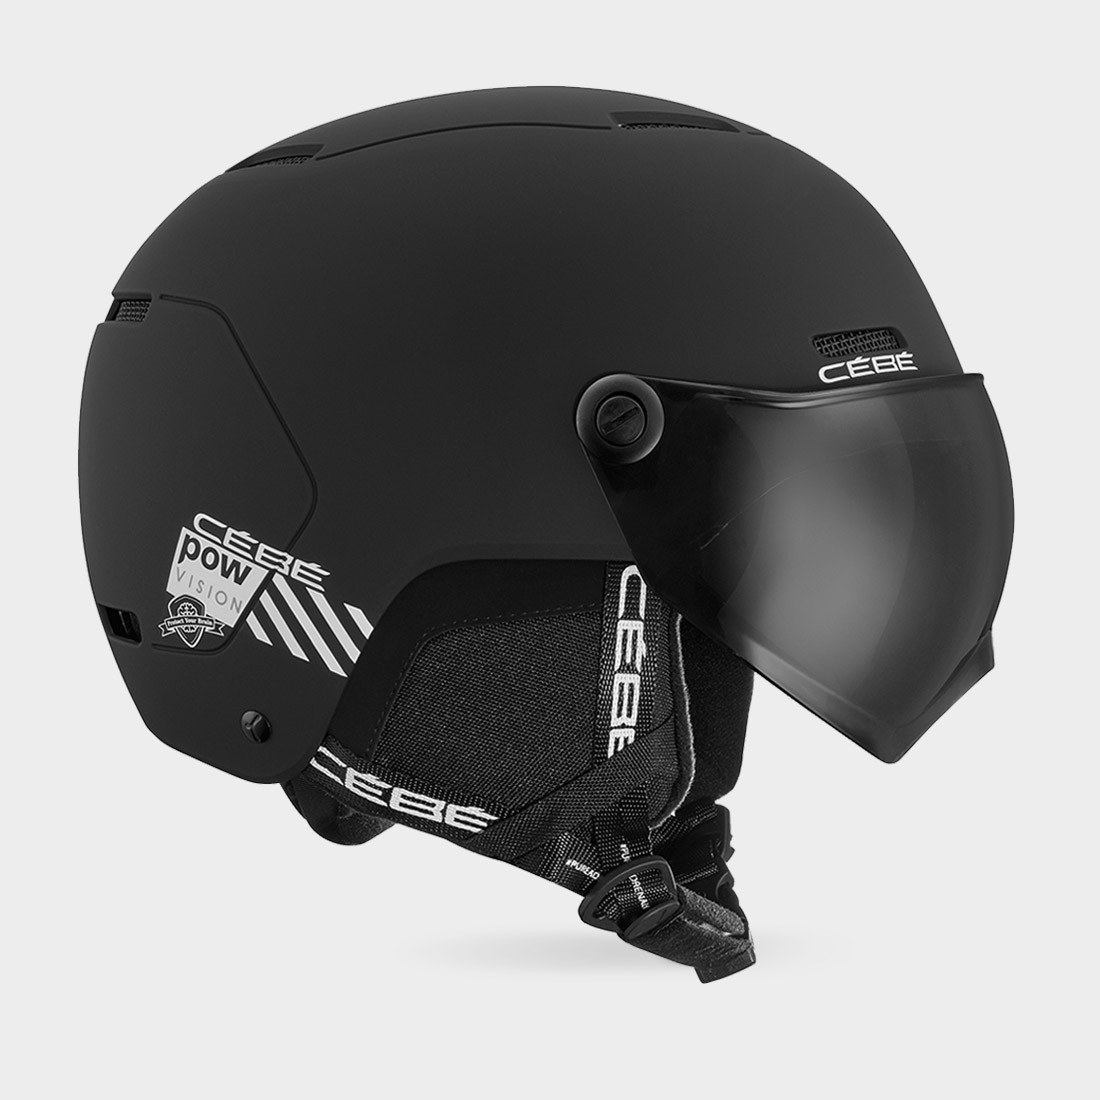 cebe-pow-vision-headset-ski-visor-black-white